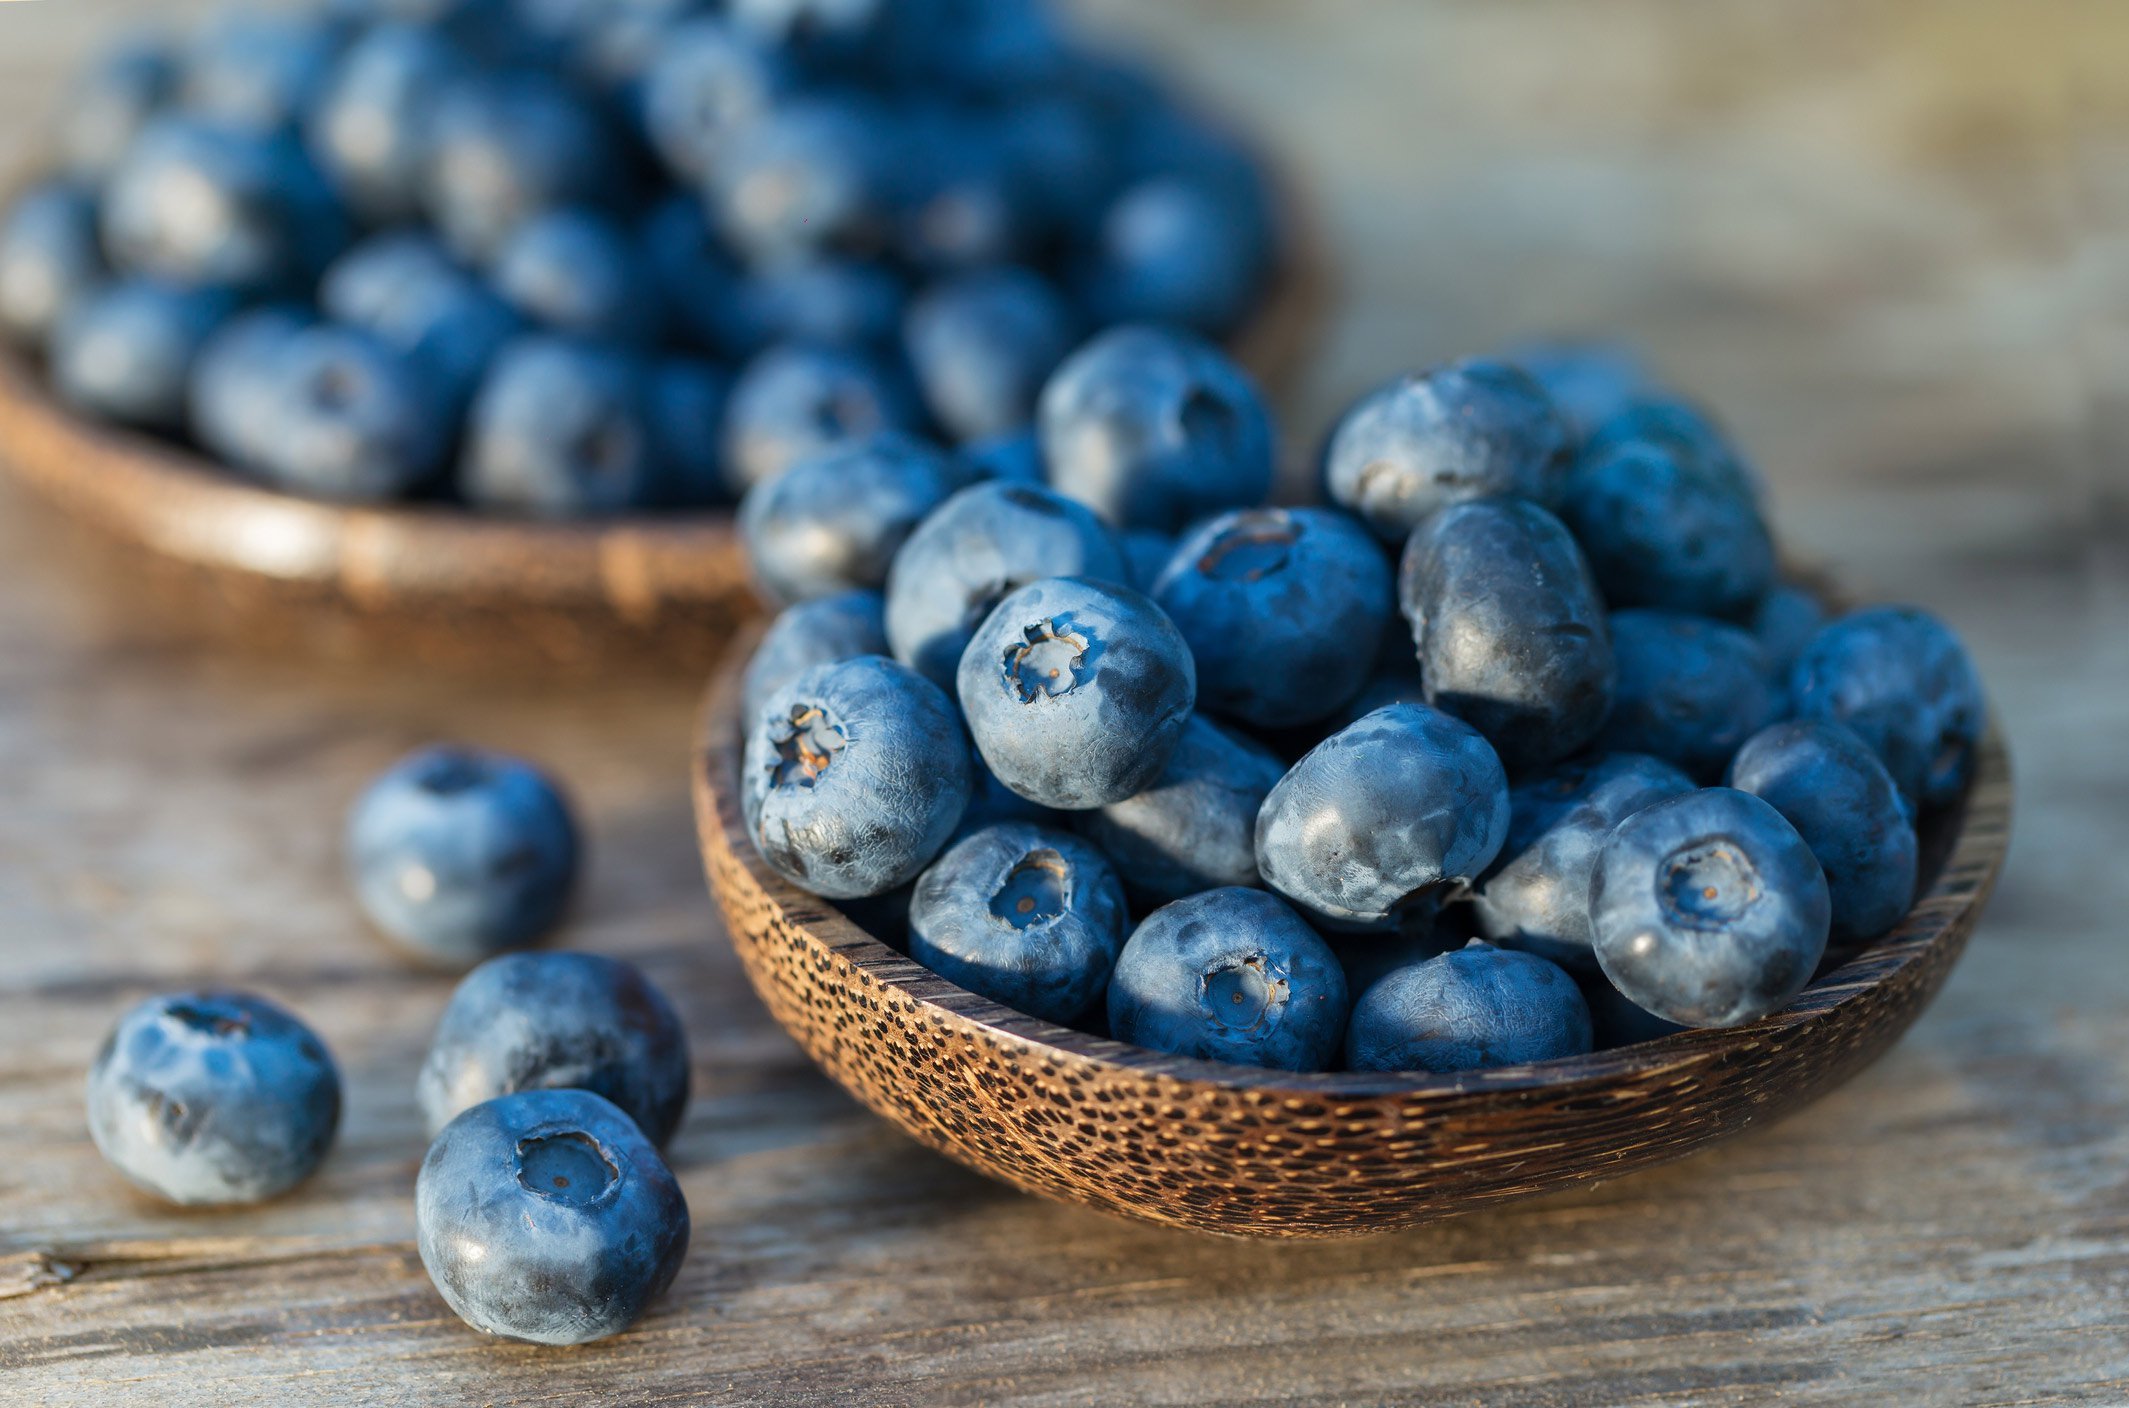 Top detoxifying foods: Blueberries